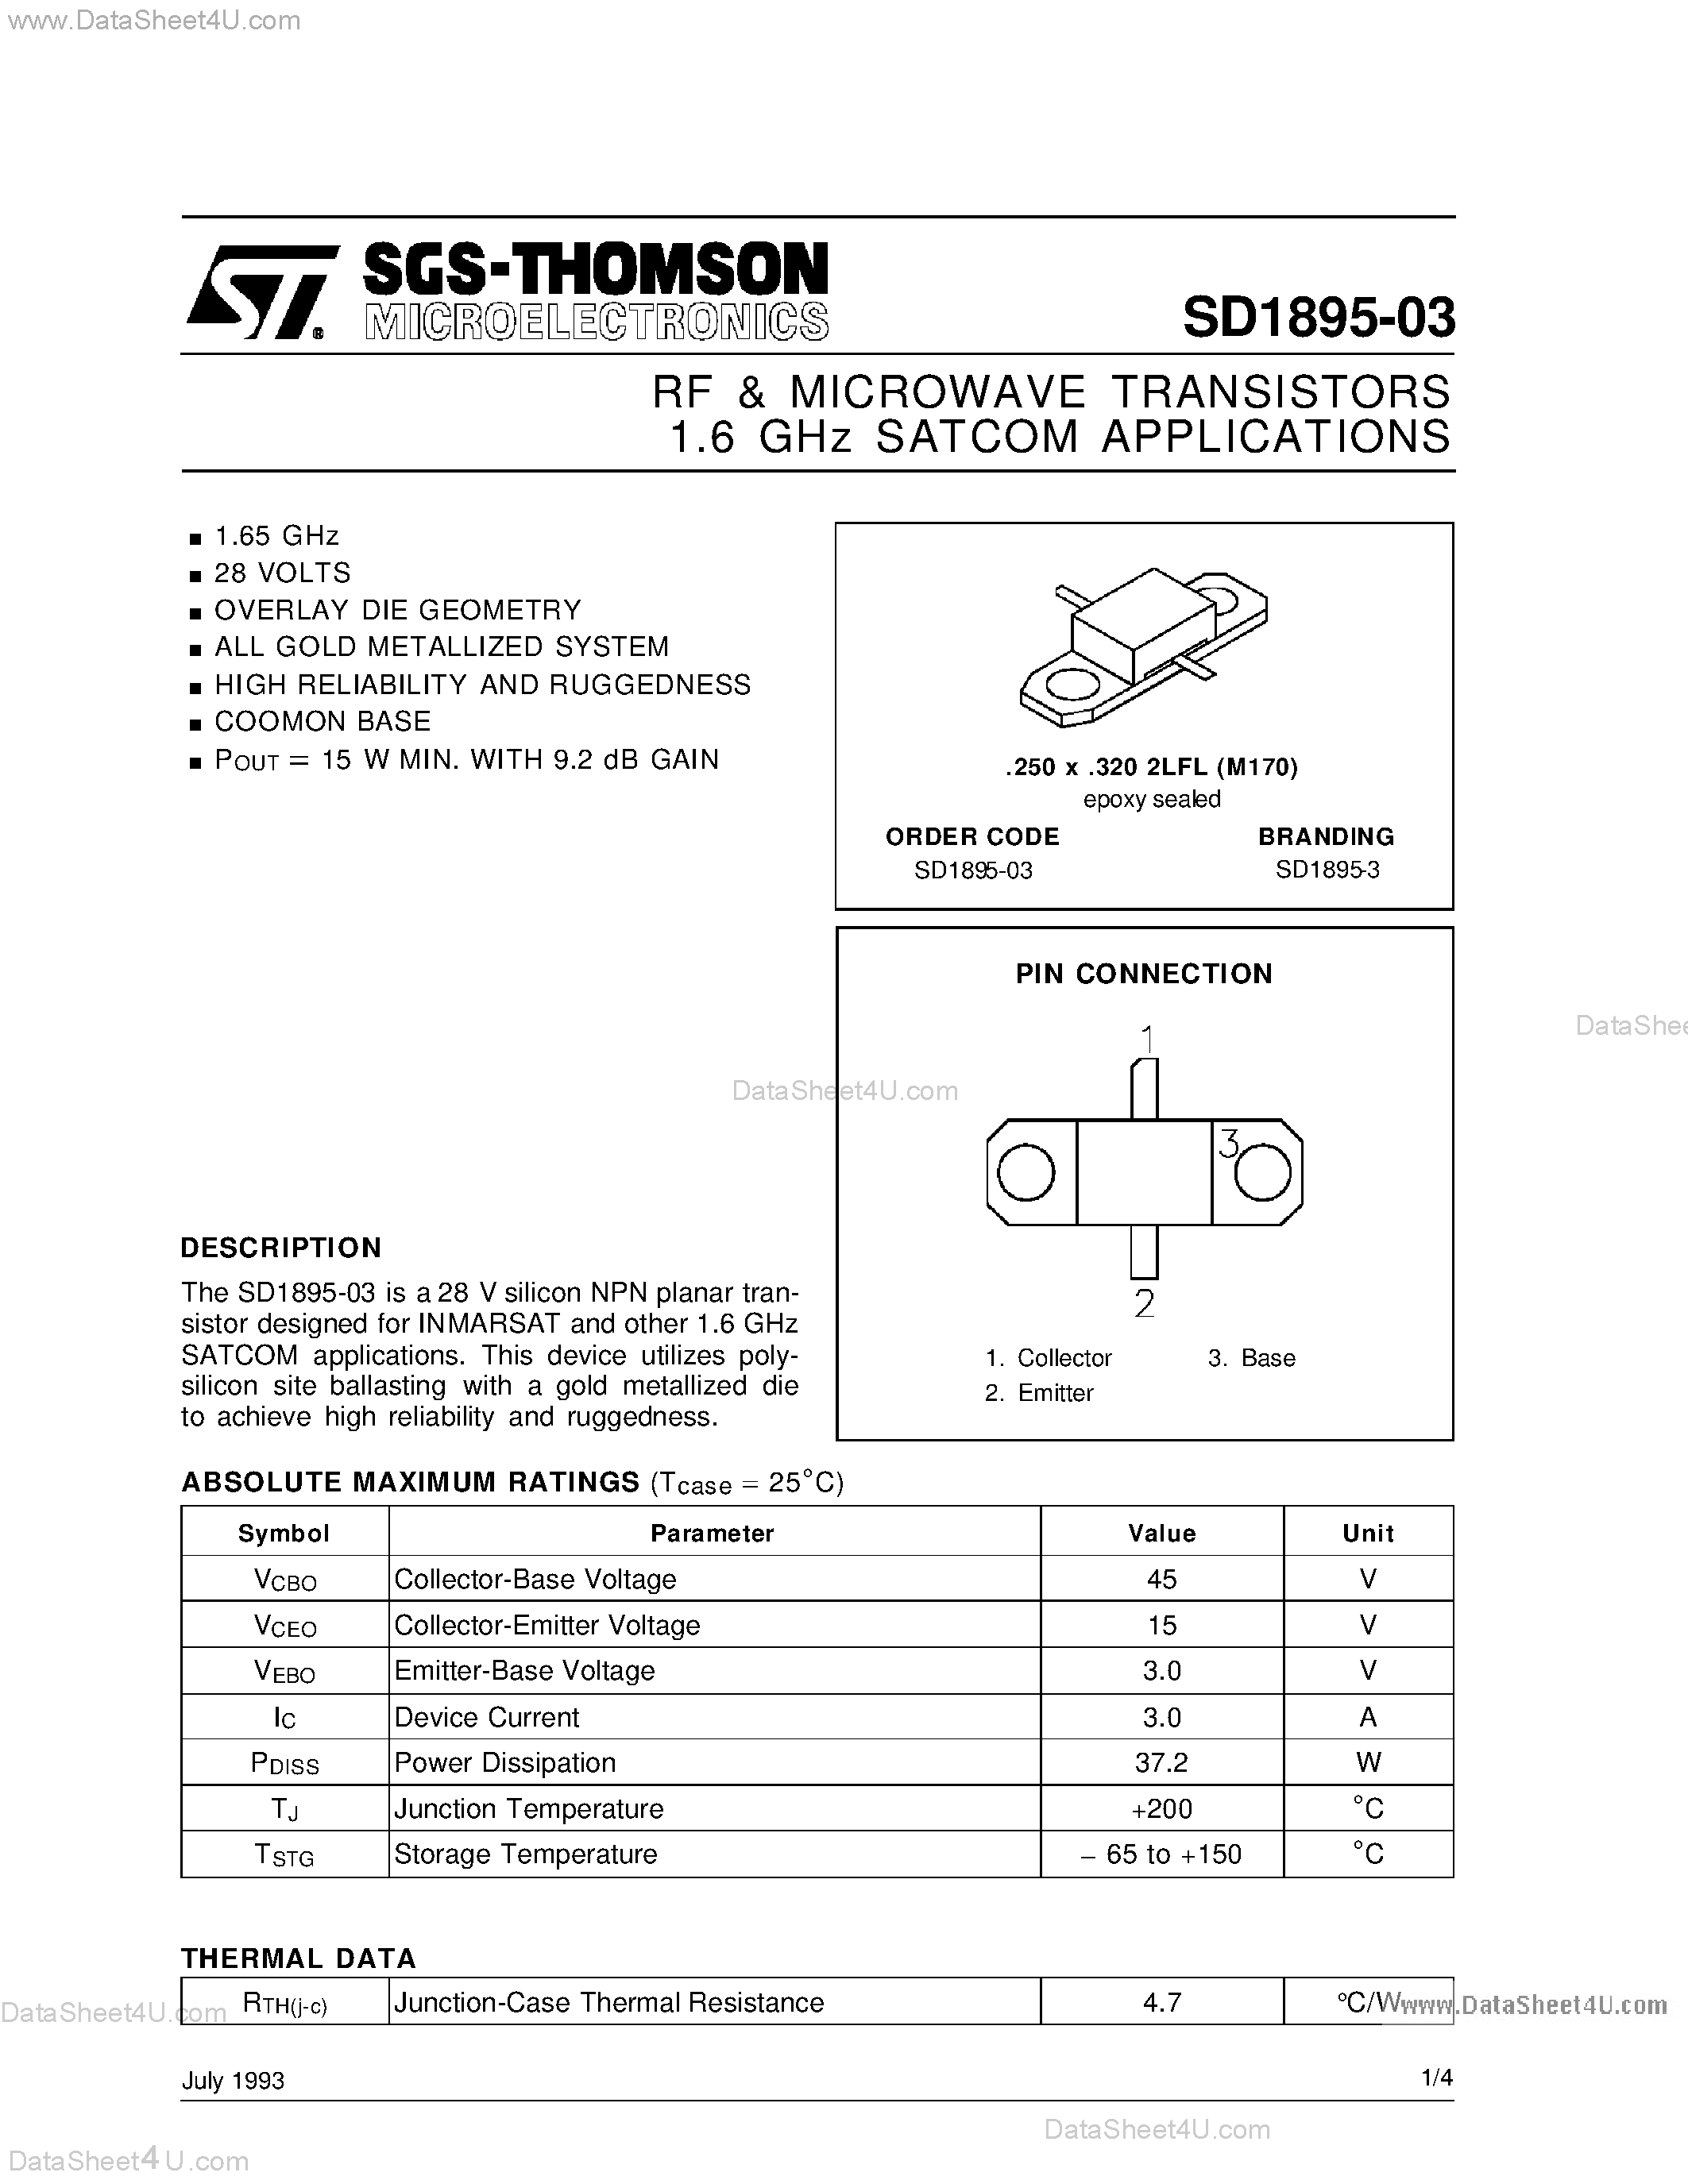 Даташит SD1895-03 - RF & MICROWAVE TRANSISTORS 1.6 GHz SATCOM APPLICATIONS страница 1